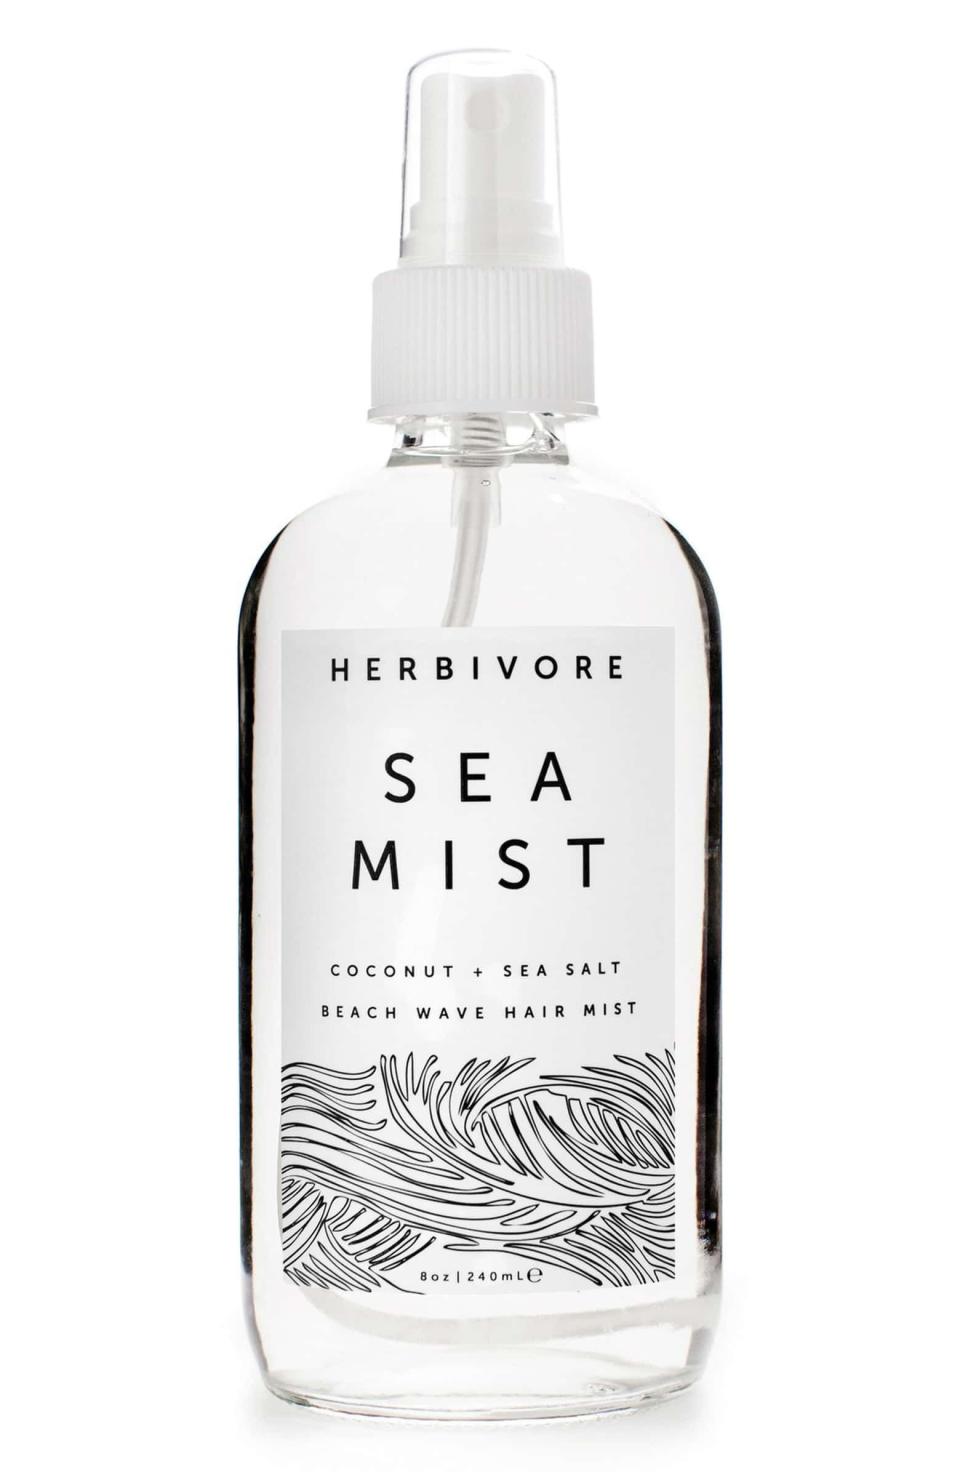 8) Herbivore Botanicals Sea Mist Coconut + Sea Salt Beach Wave Hair Mist